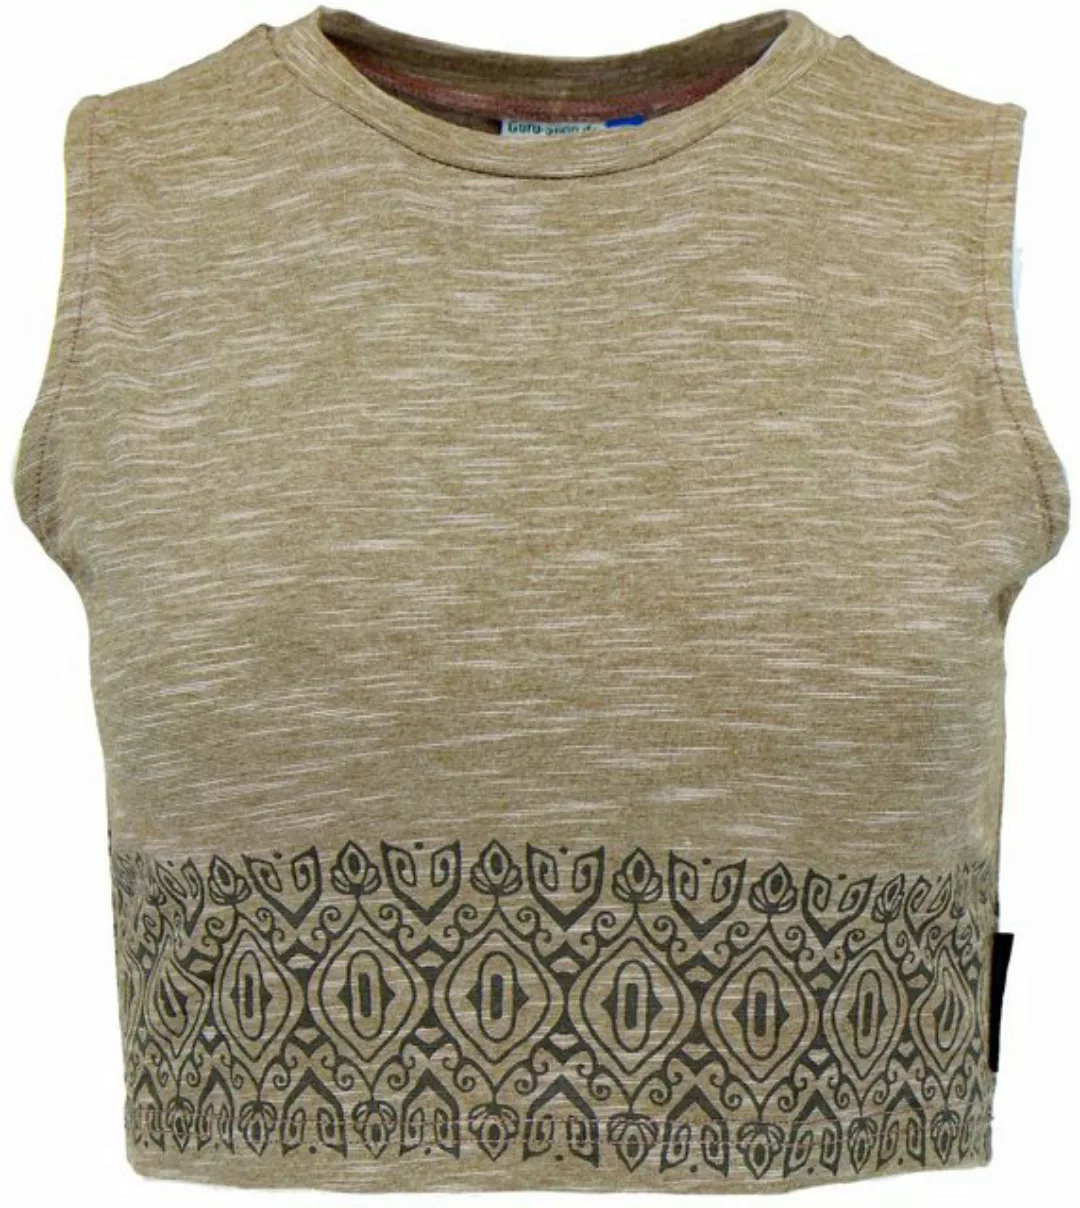 Guru-Shop T-Shirt Kurzes Top, bedrucktes Yoga Top, Yogatop aus.. alternativ günstig online kaufen